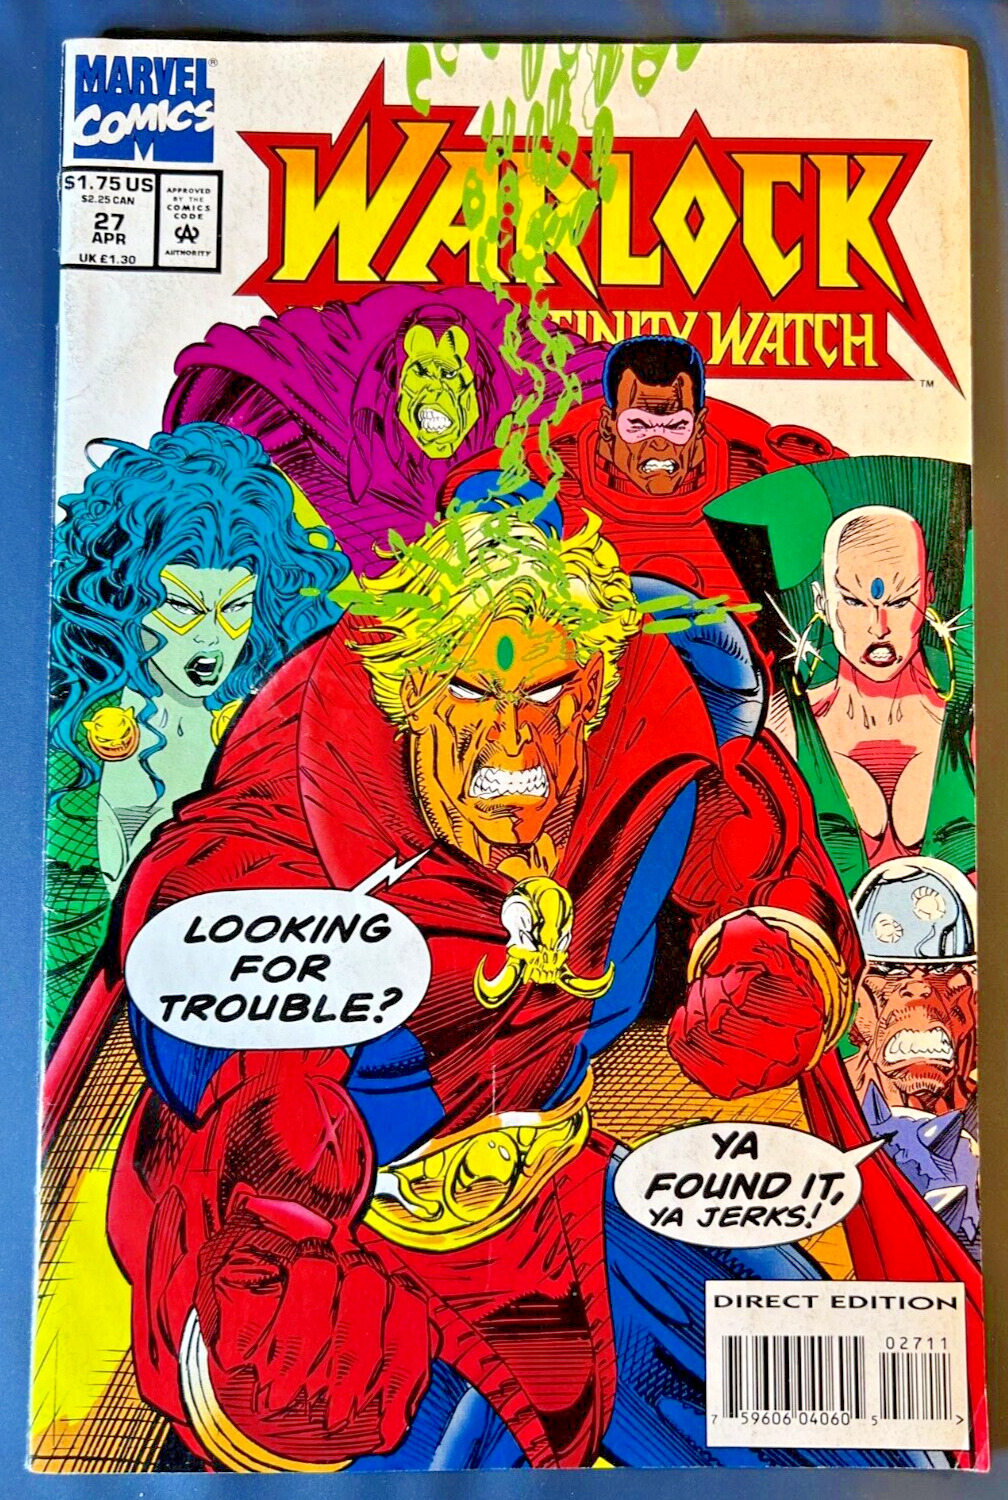 WARLOCK INFINITY WATCH #27 April 1994  Avengers vs Infinity Watch Marvel Comics